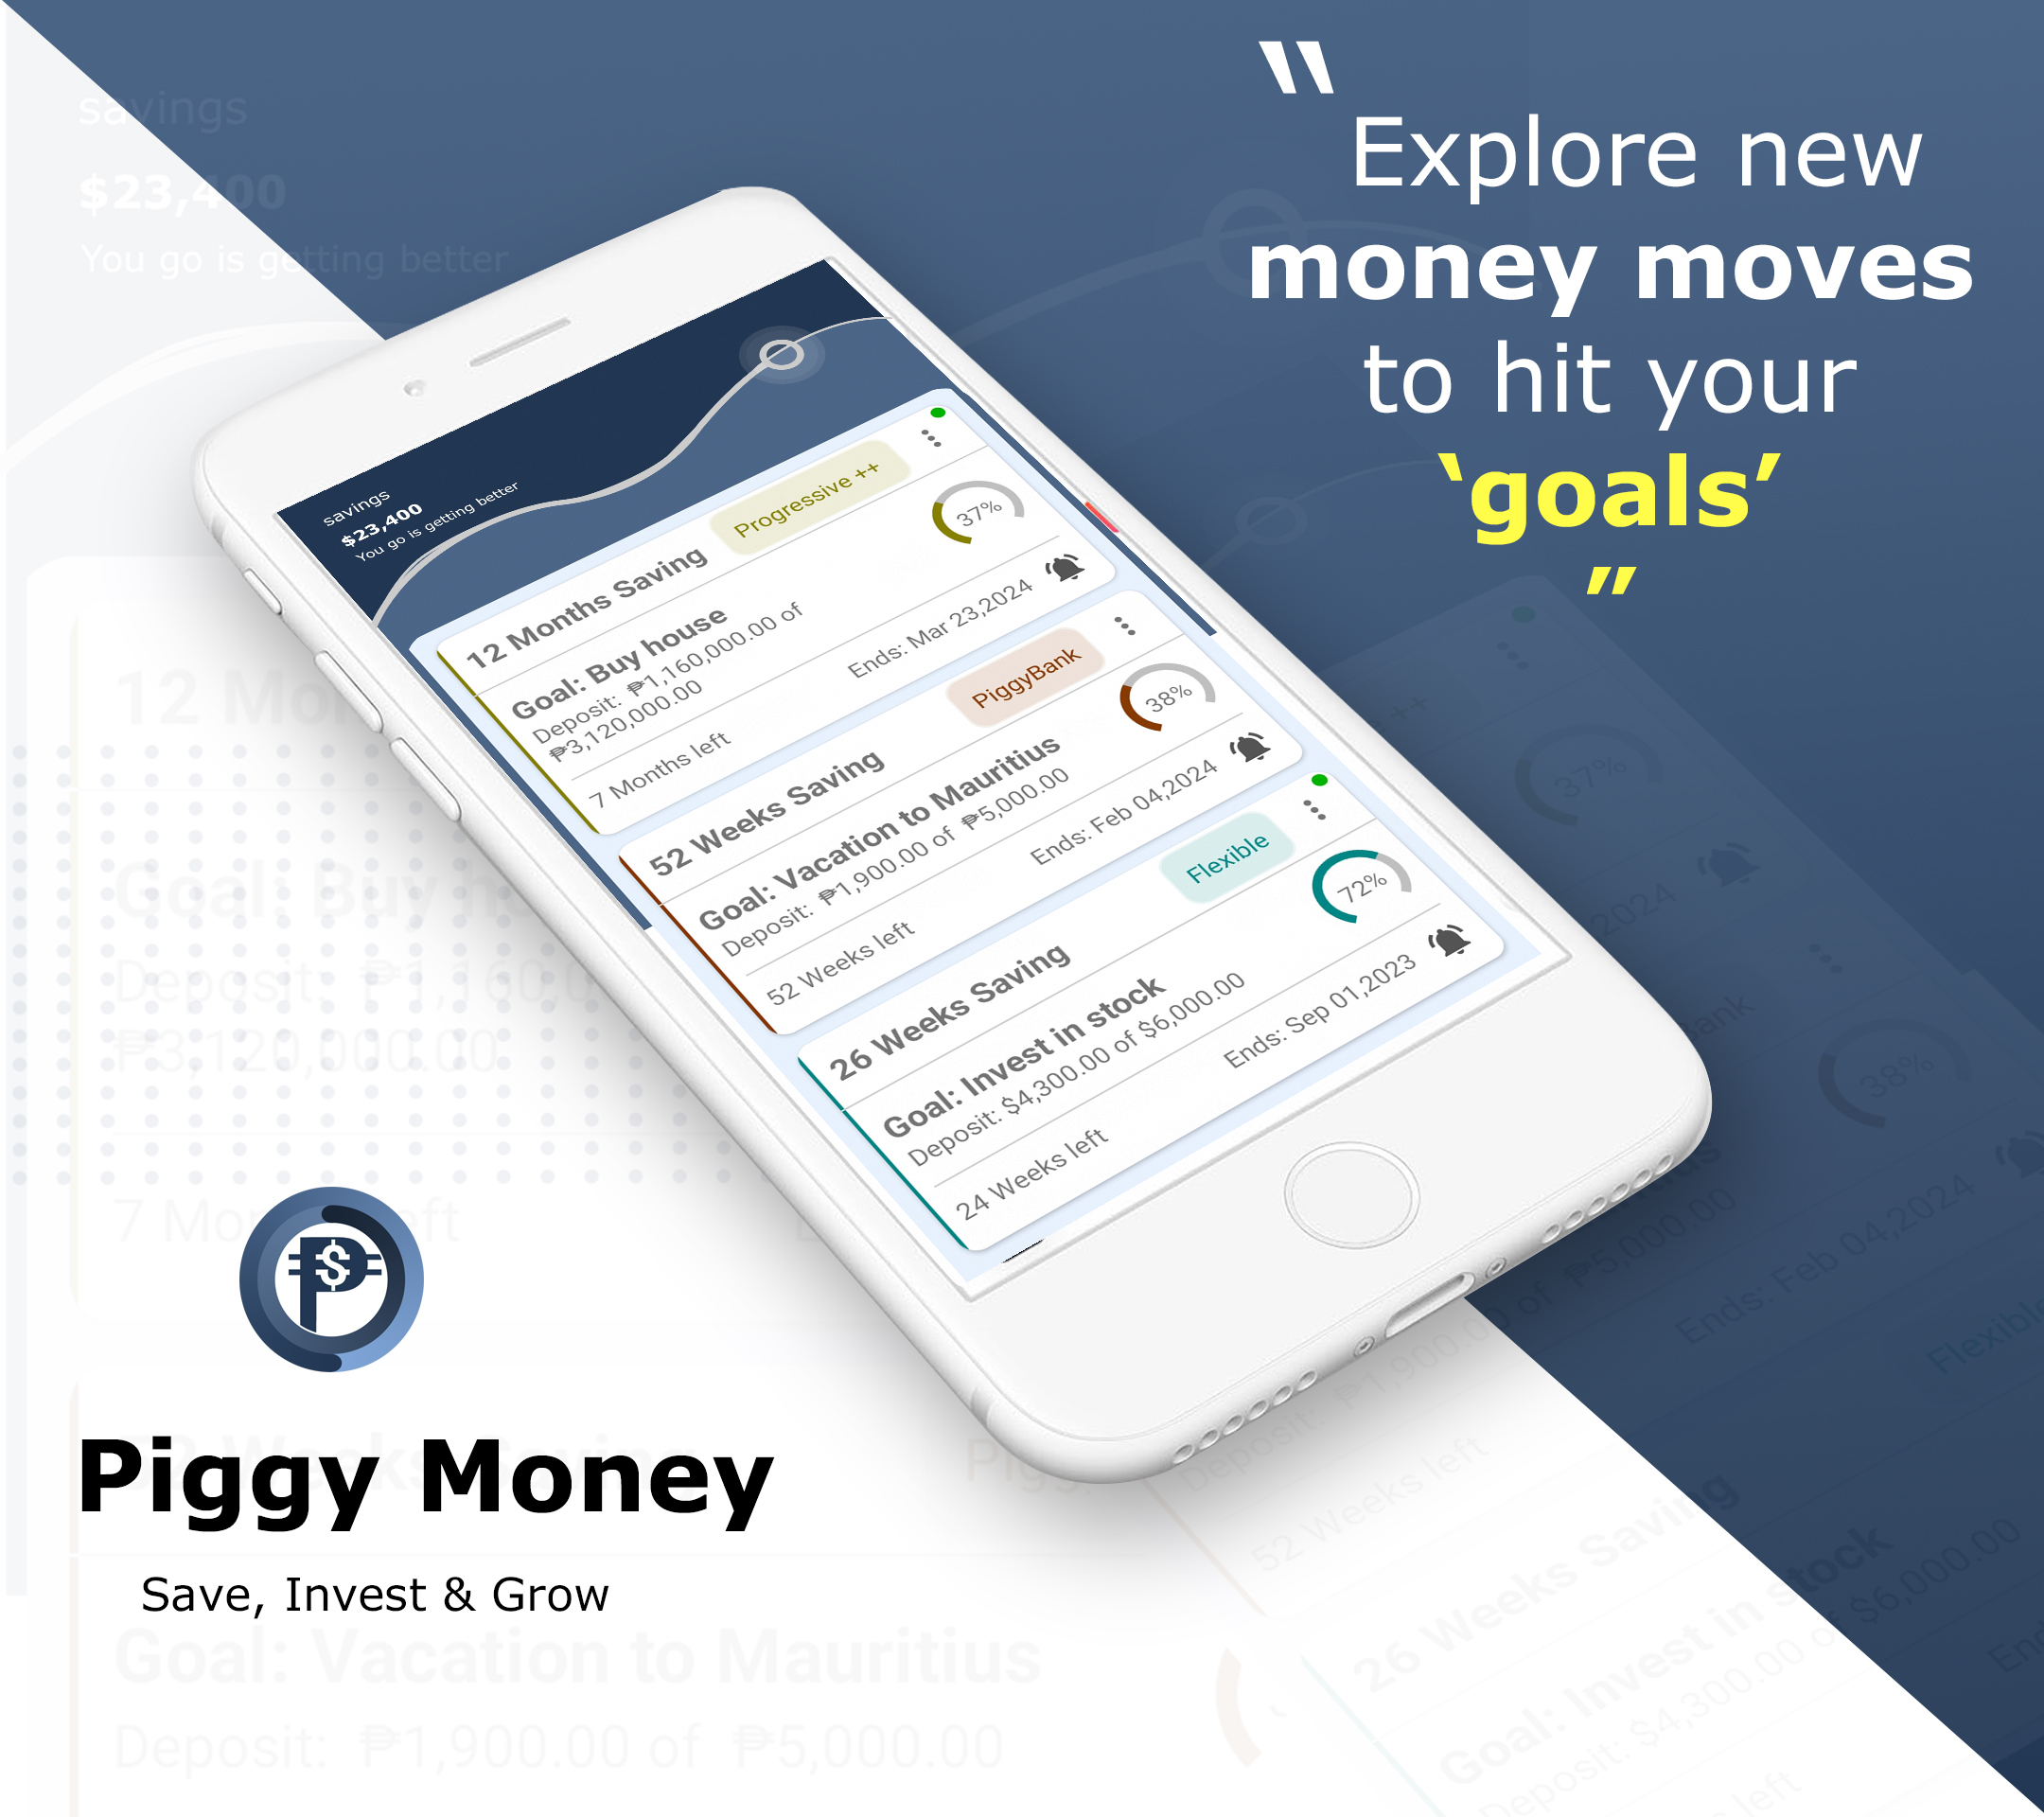 Piggy money - save and invest